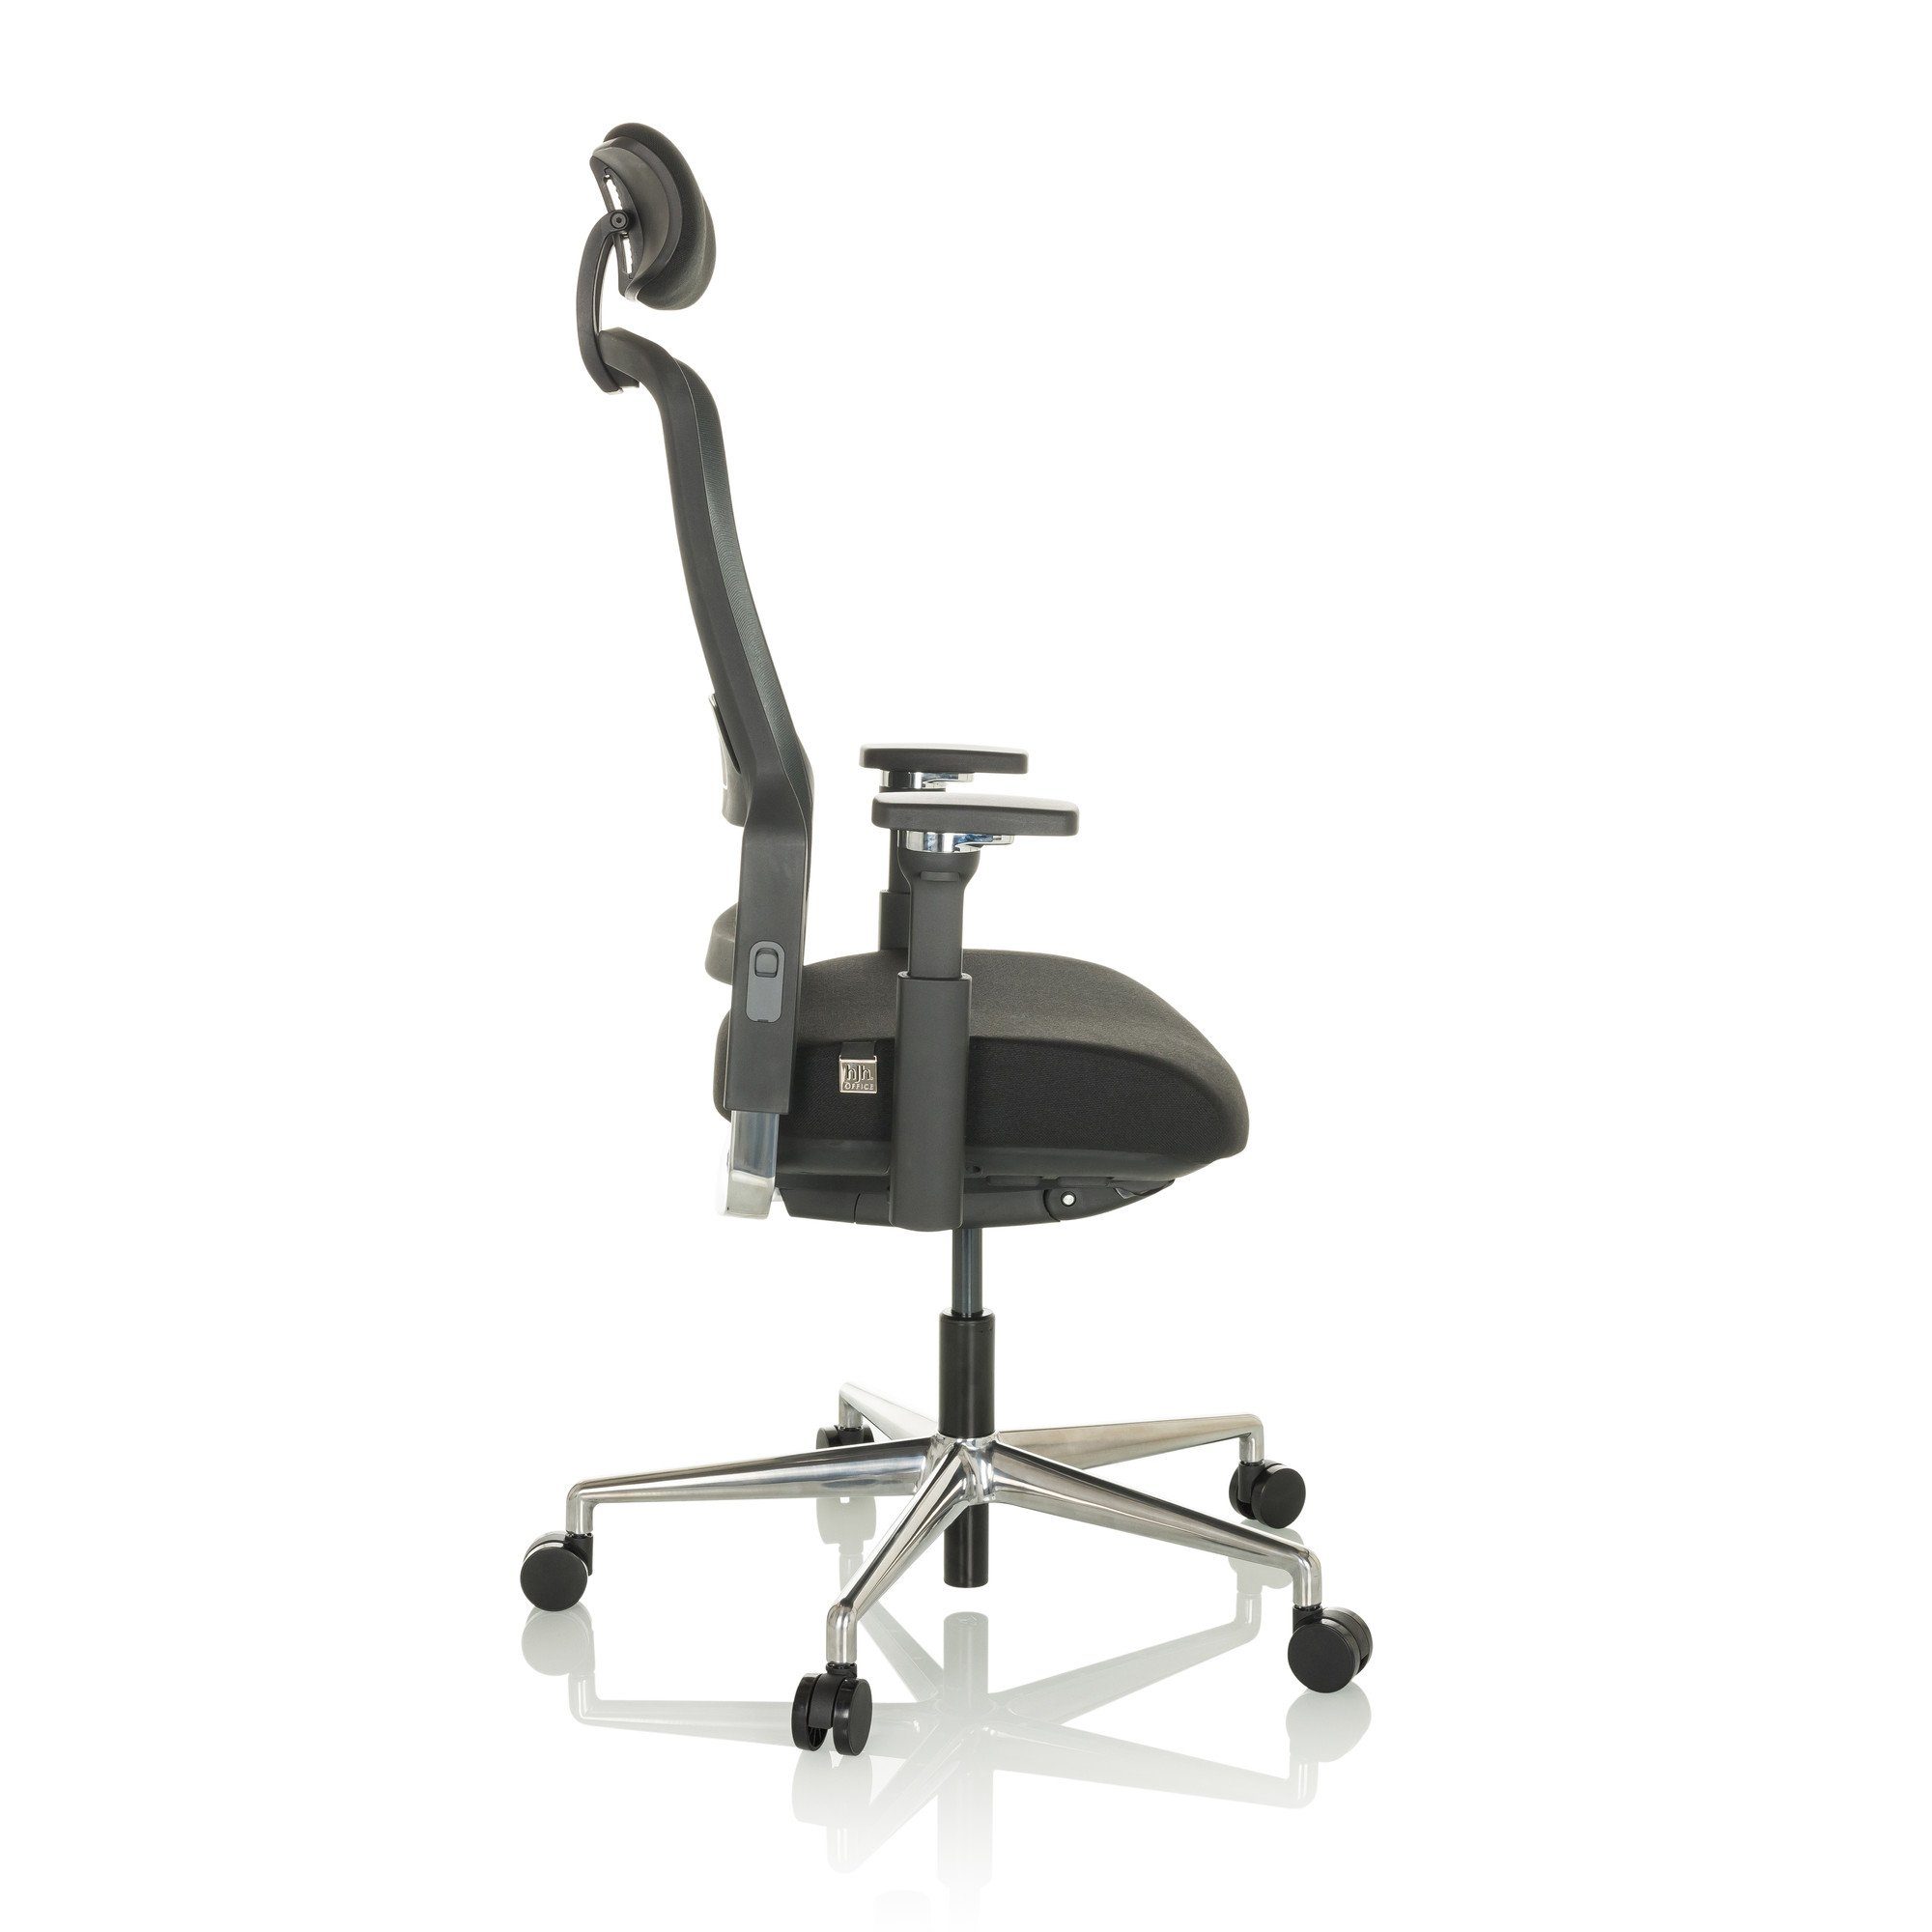 OFFICE Schreibtischstuhl Drehstuhl (1 Profi St), ergonomisch hjh TERARO AX Stoff/Netzstoff Bürostuhl